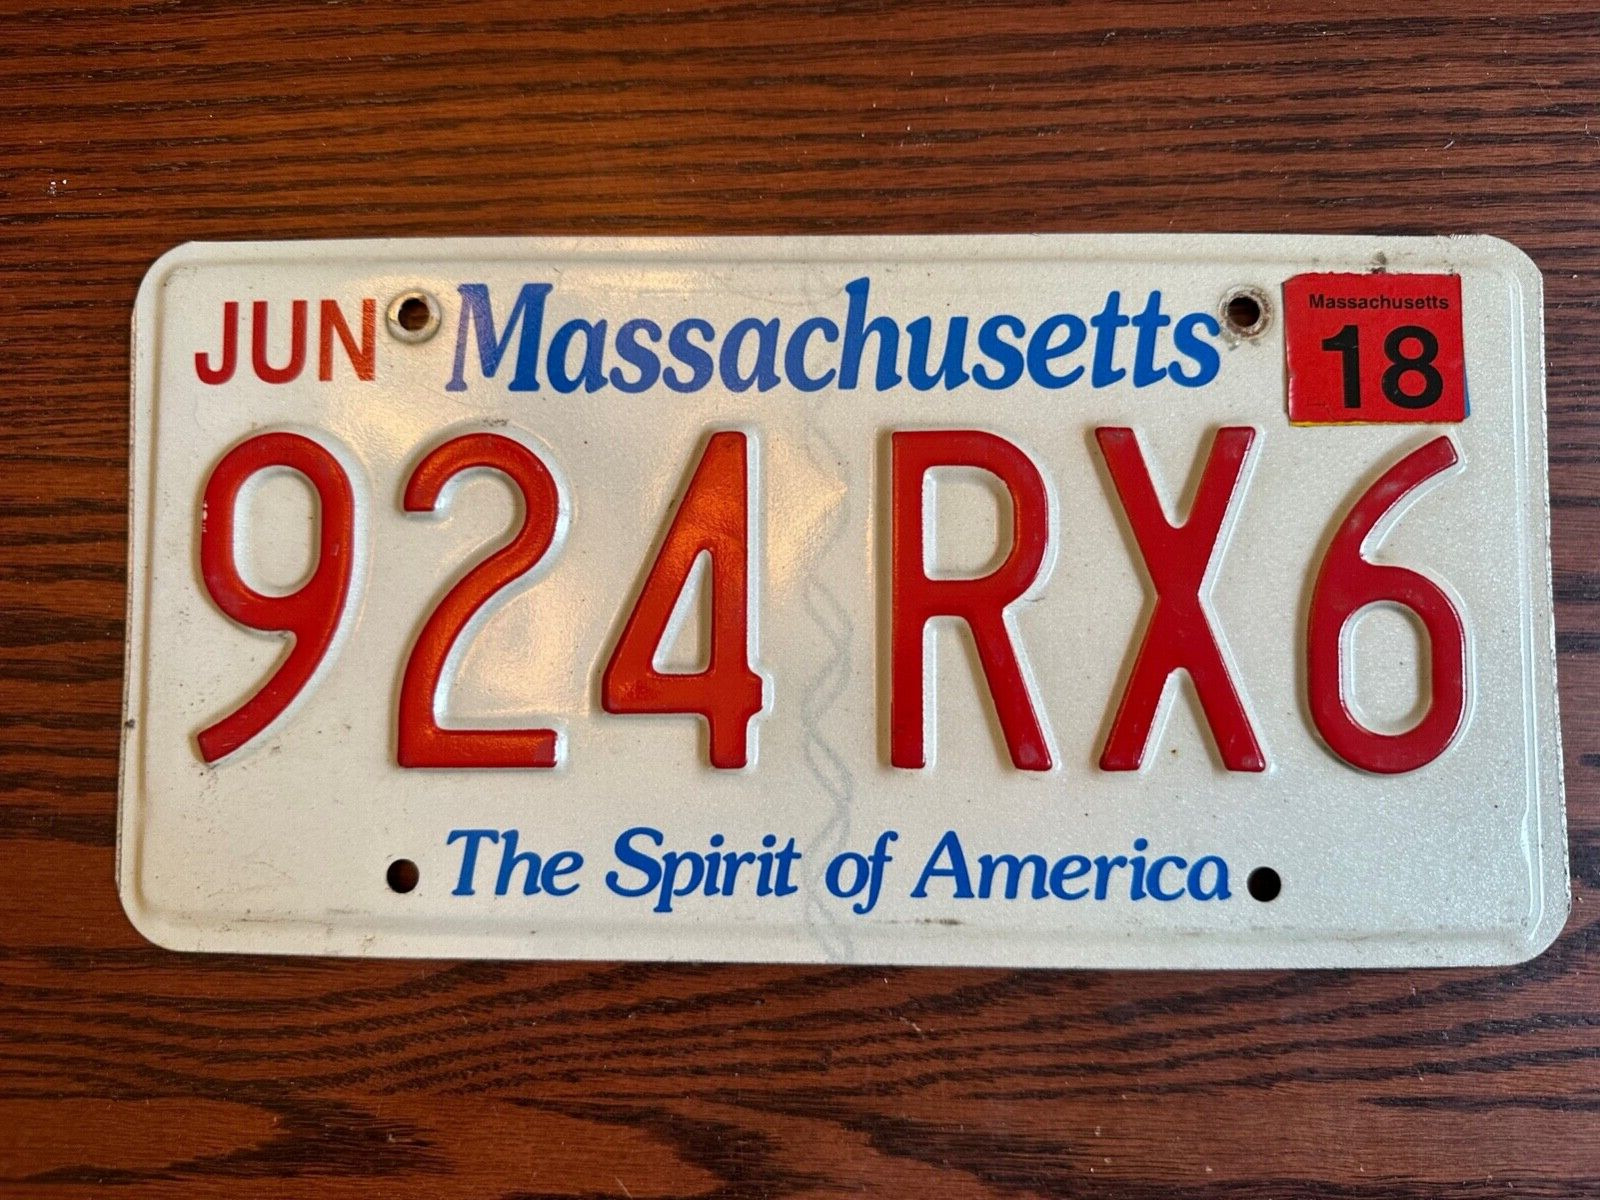 2018 Massachusetts License Plate 924 RX6 Spirit of America MA USA Authentic June